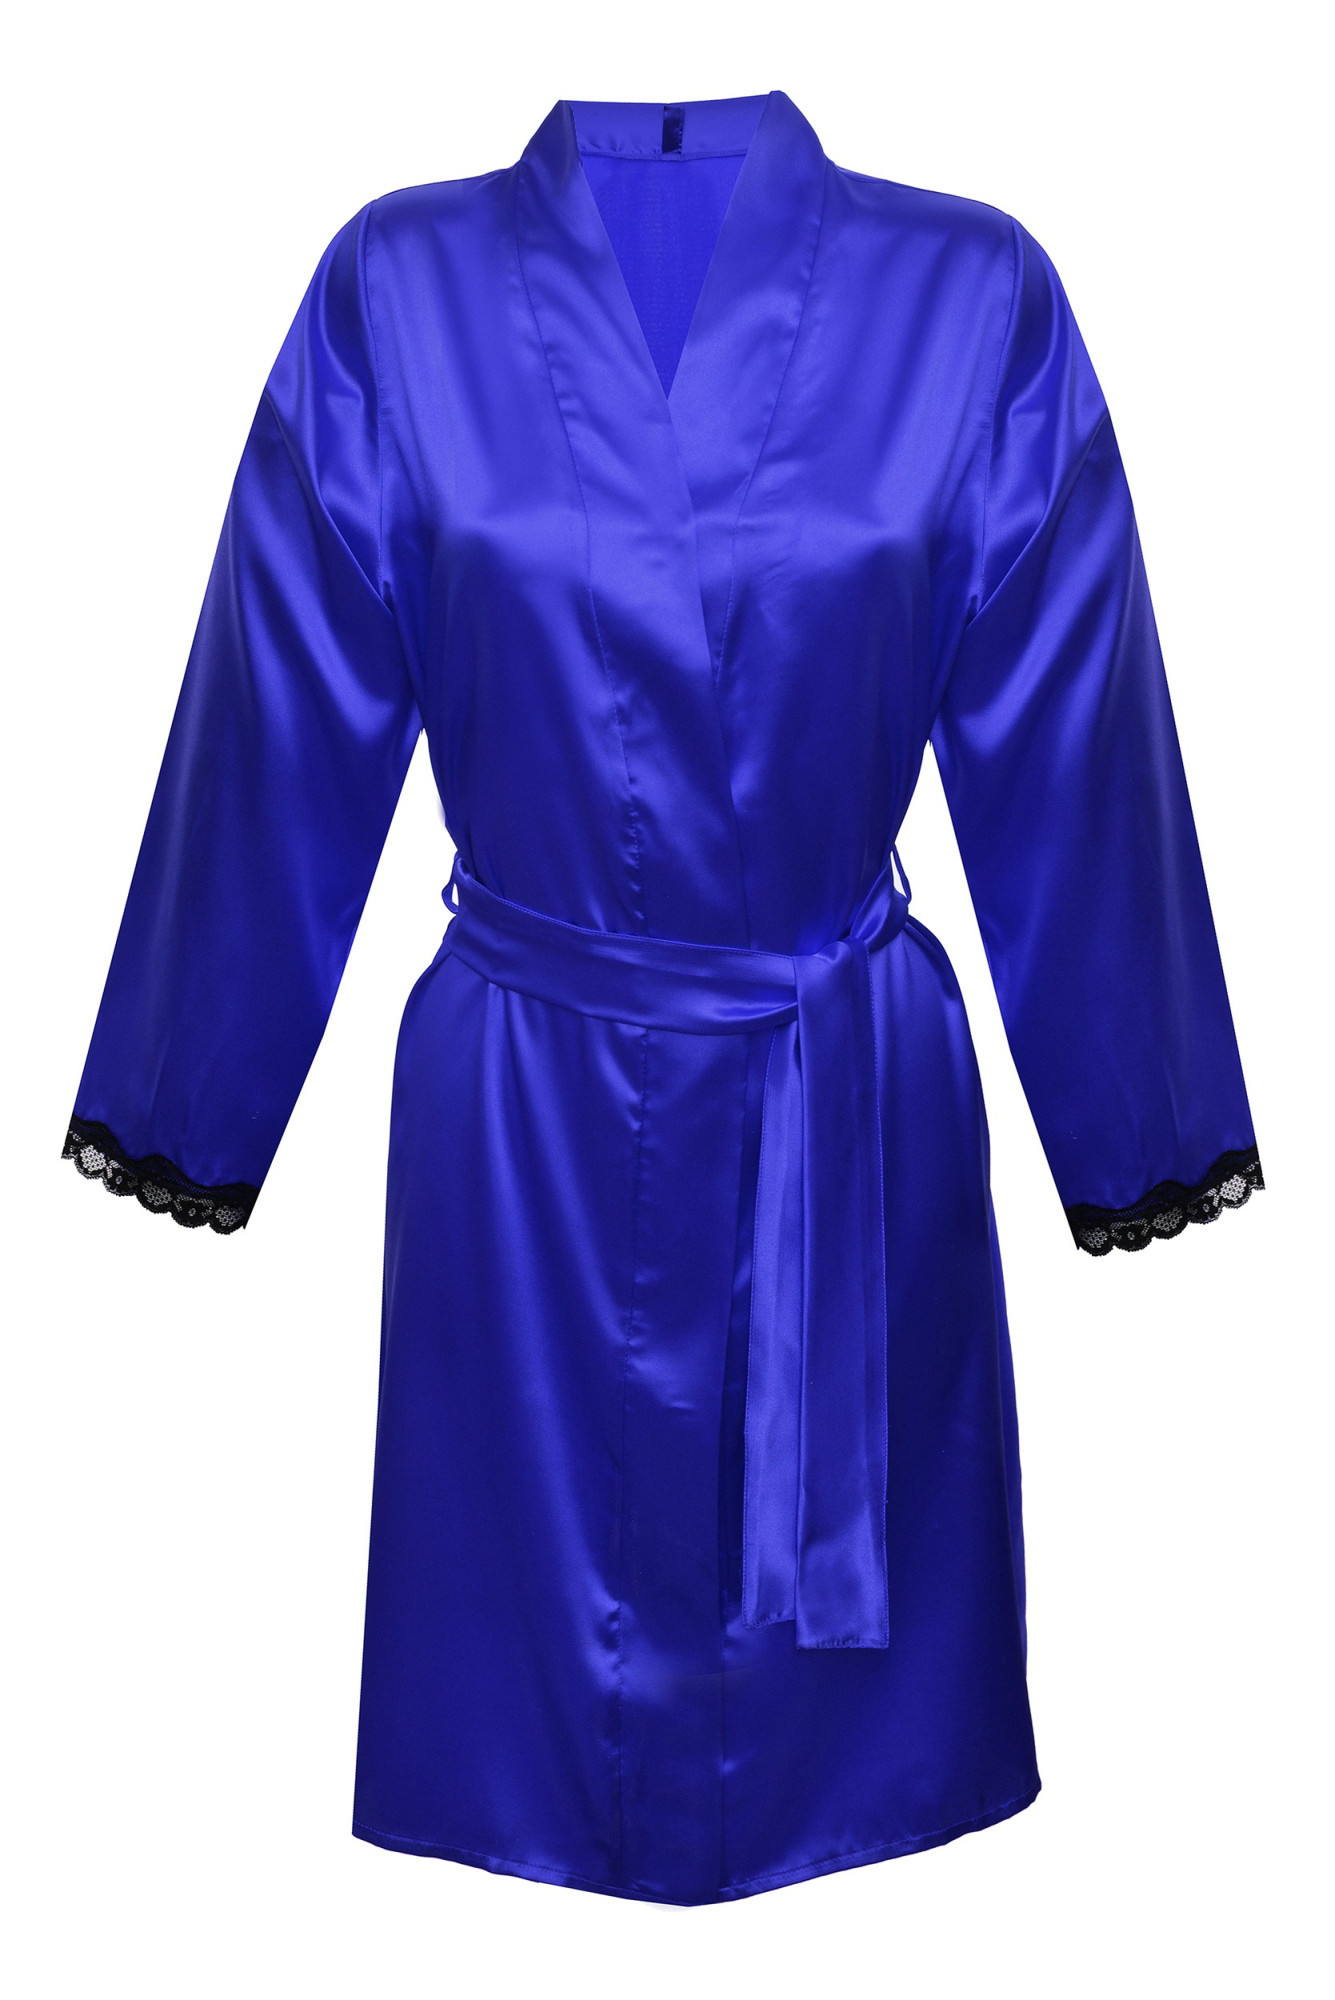 DKaren Housecoat Nancy Blue XS Blue